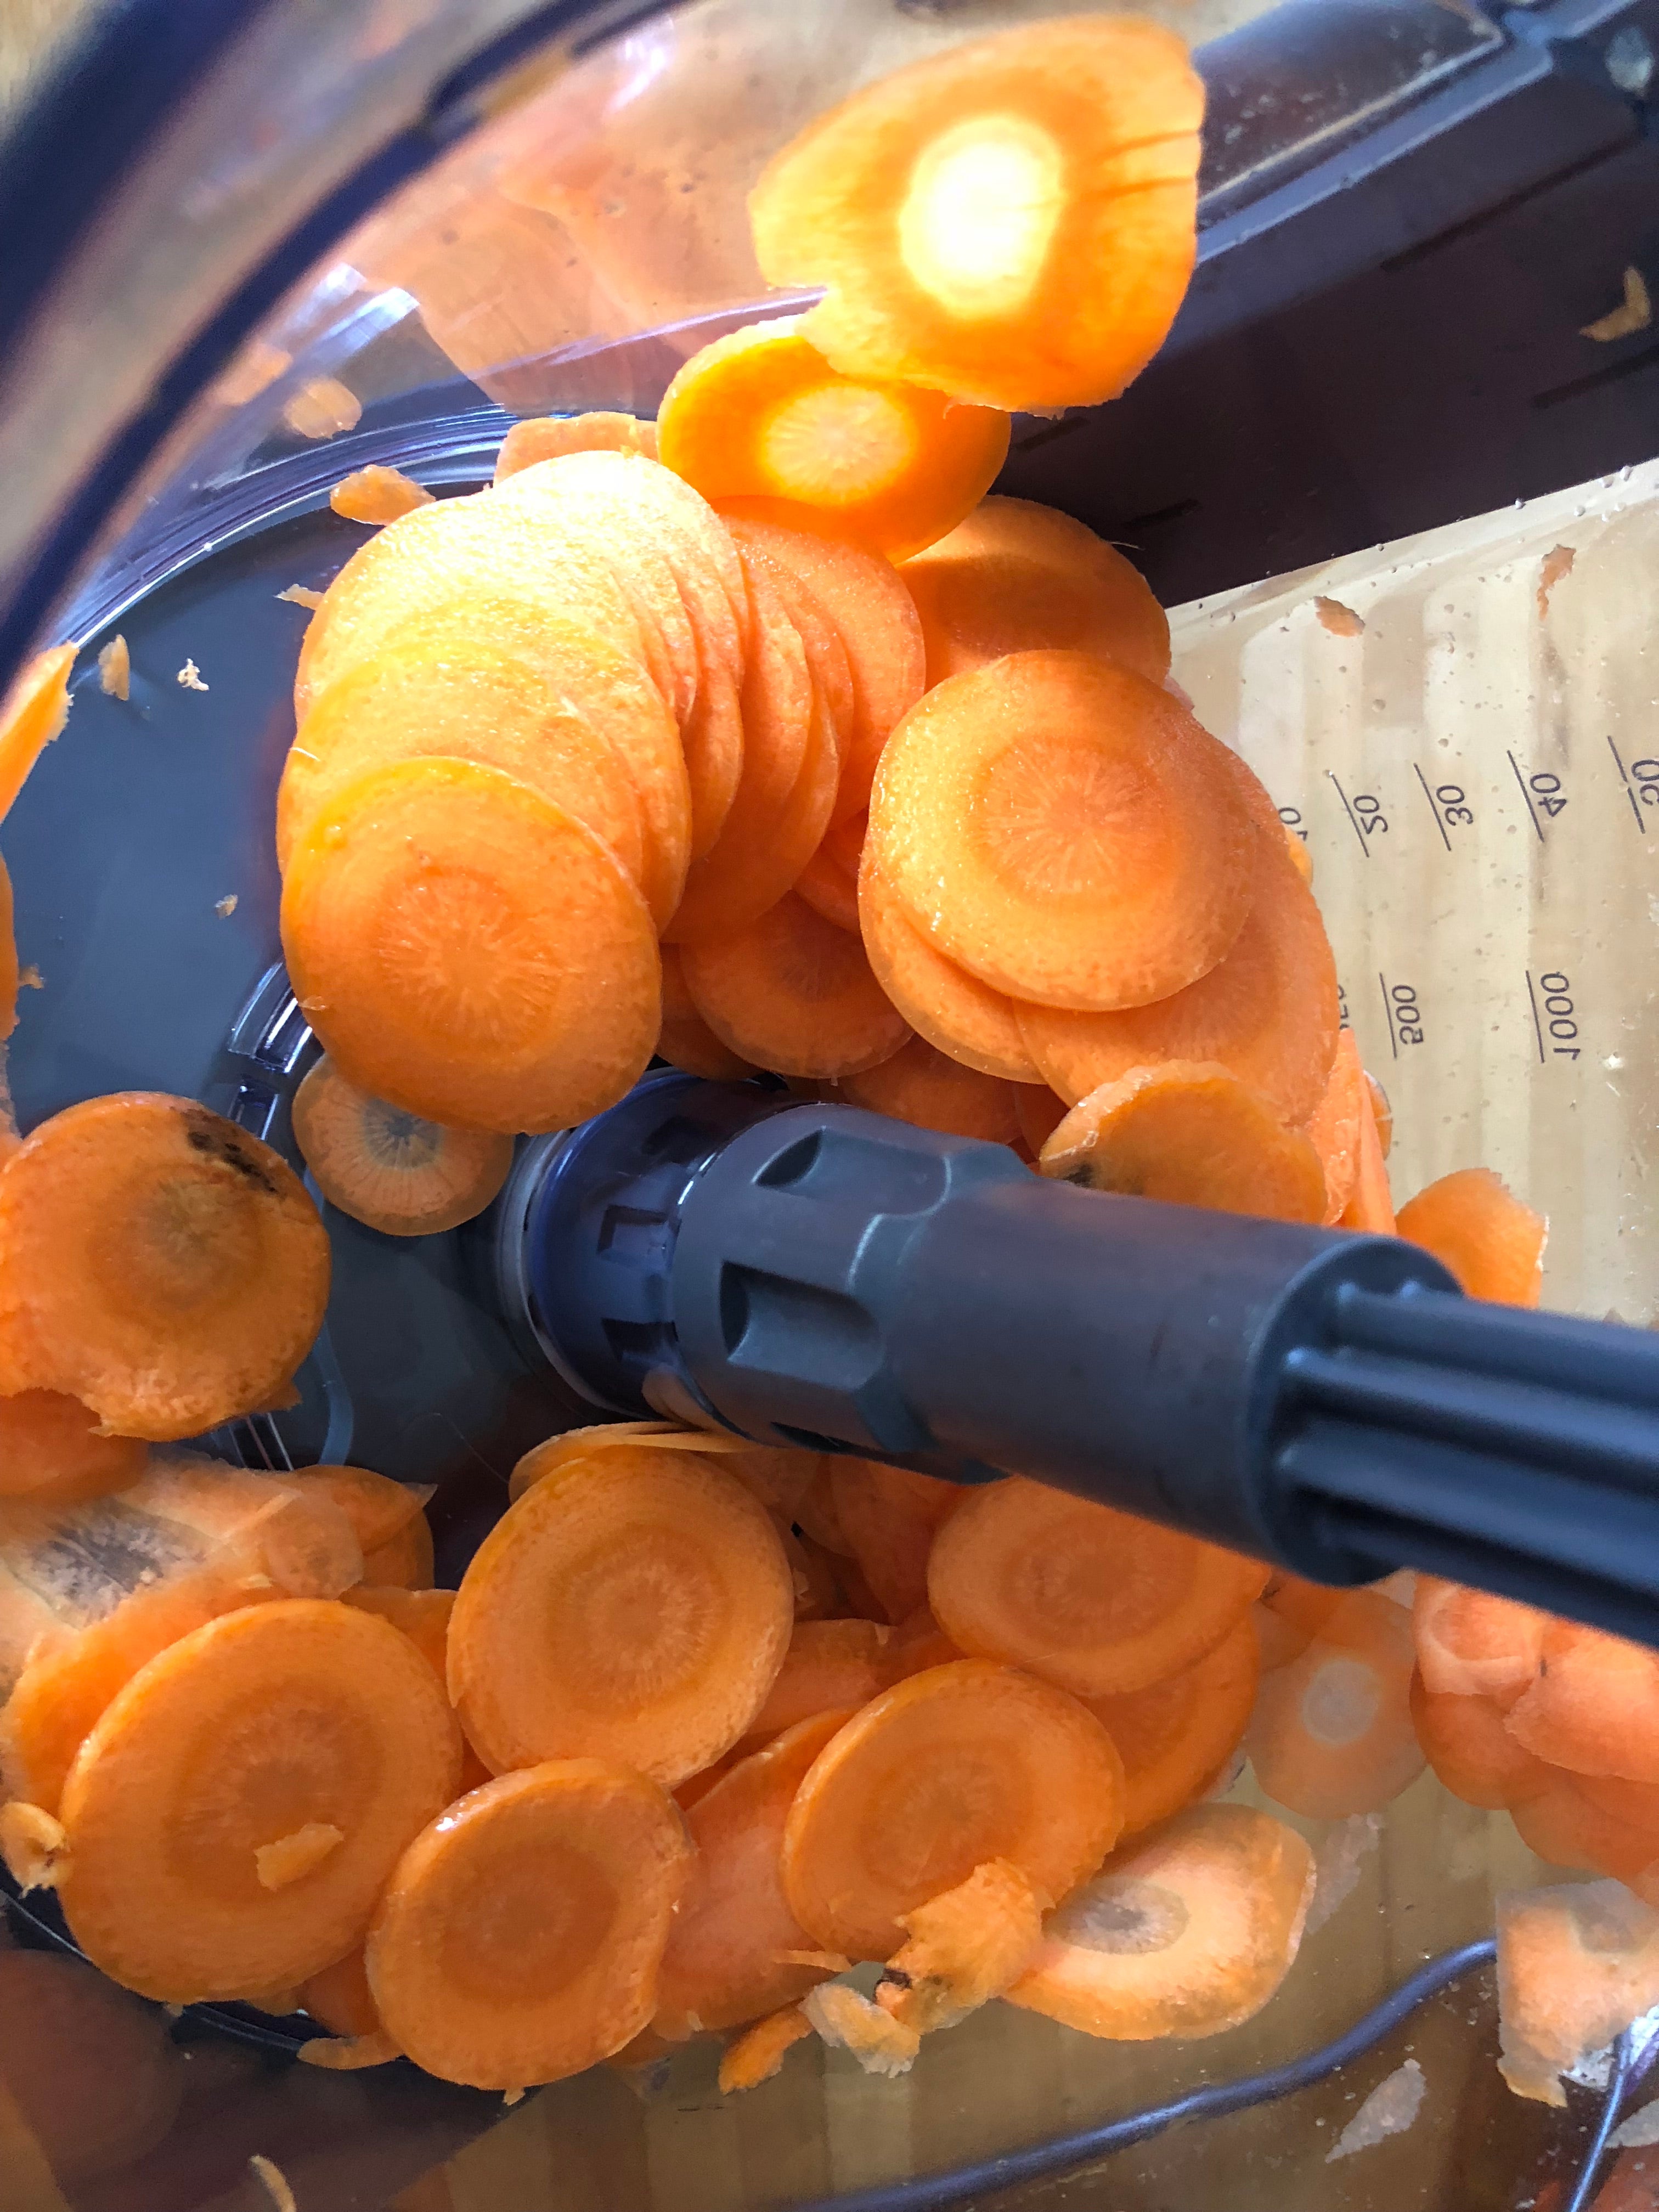 Kenwood Multipro Classic FDM790BA Food Processor carrots chopped